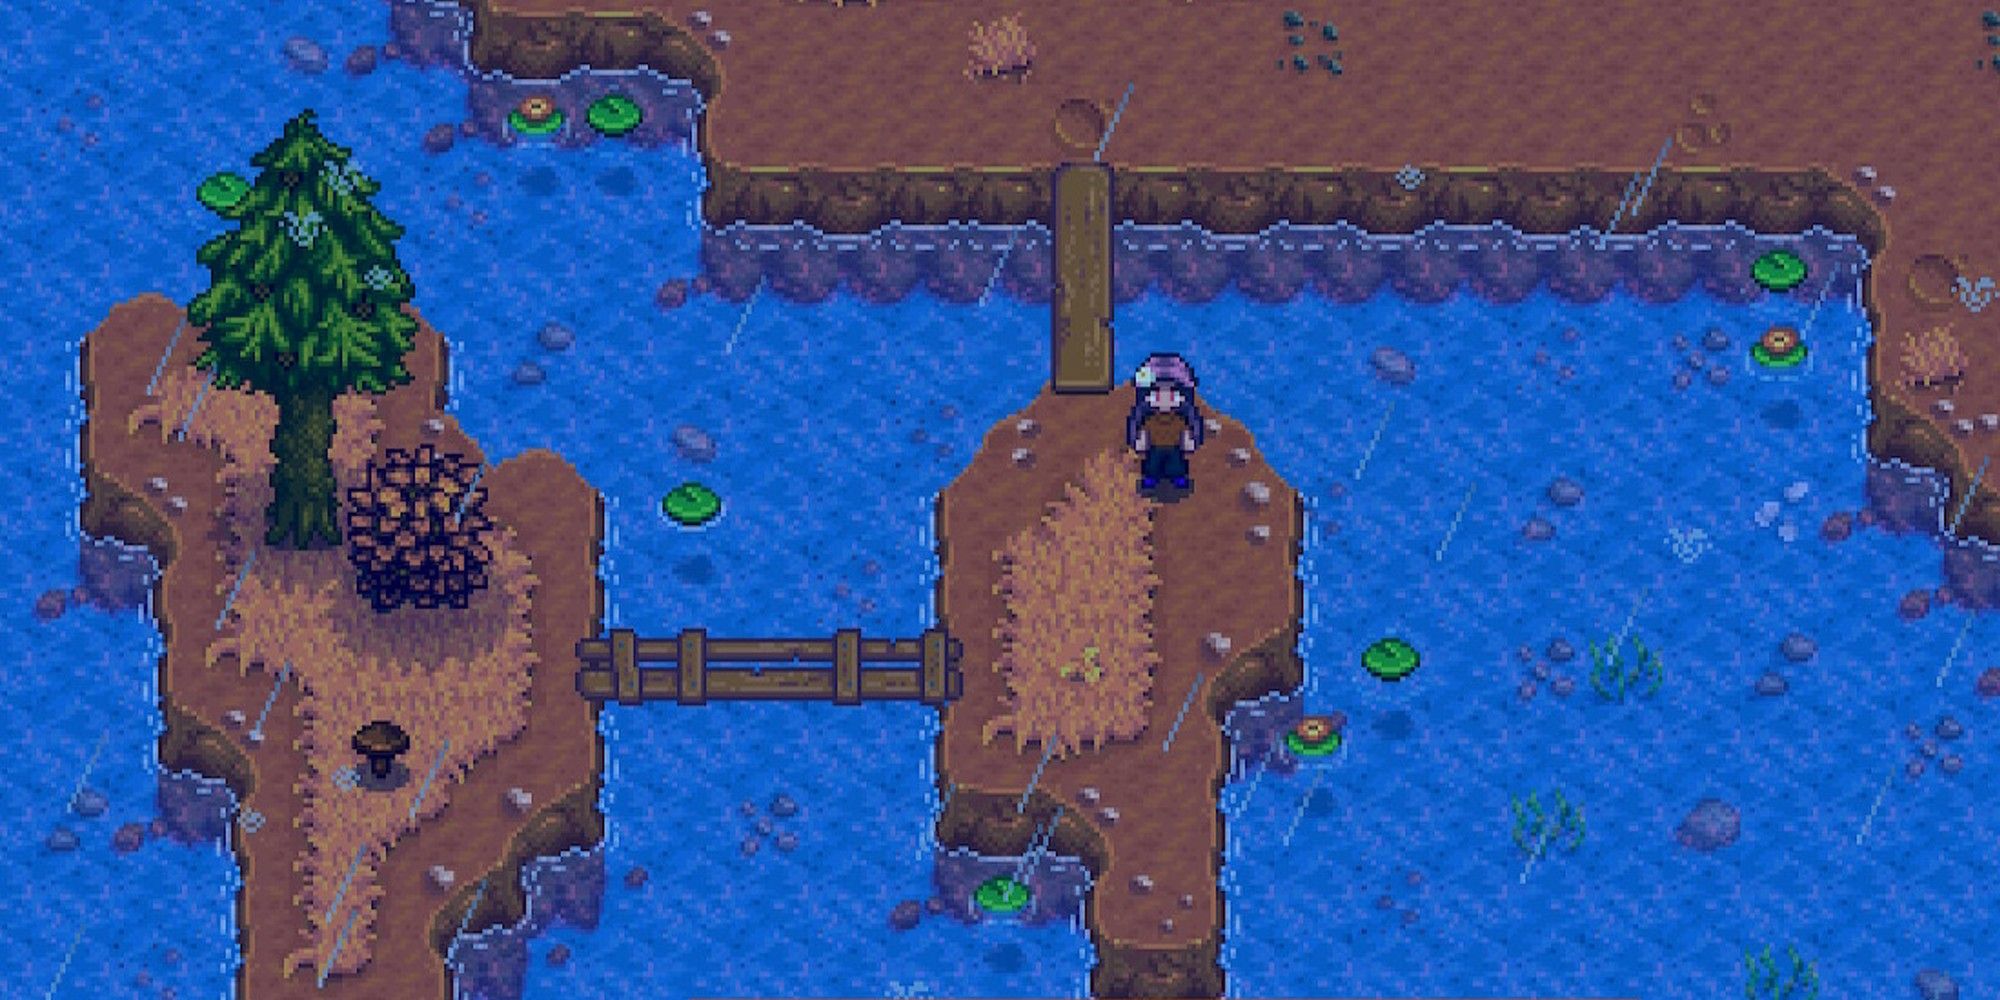 player standing on bridge shortcut to adventurers guild